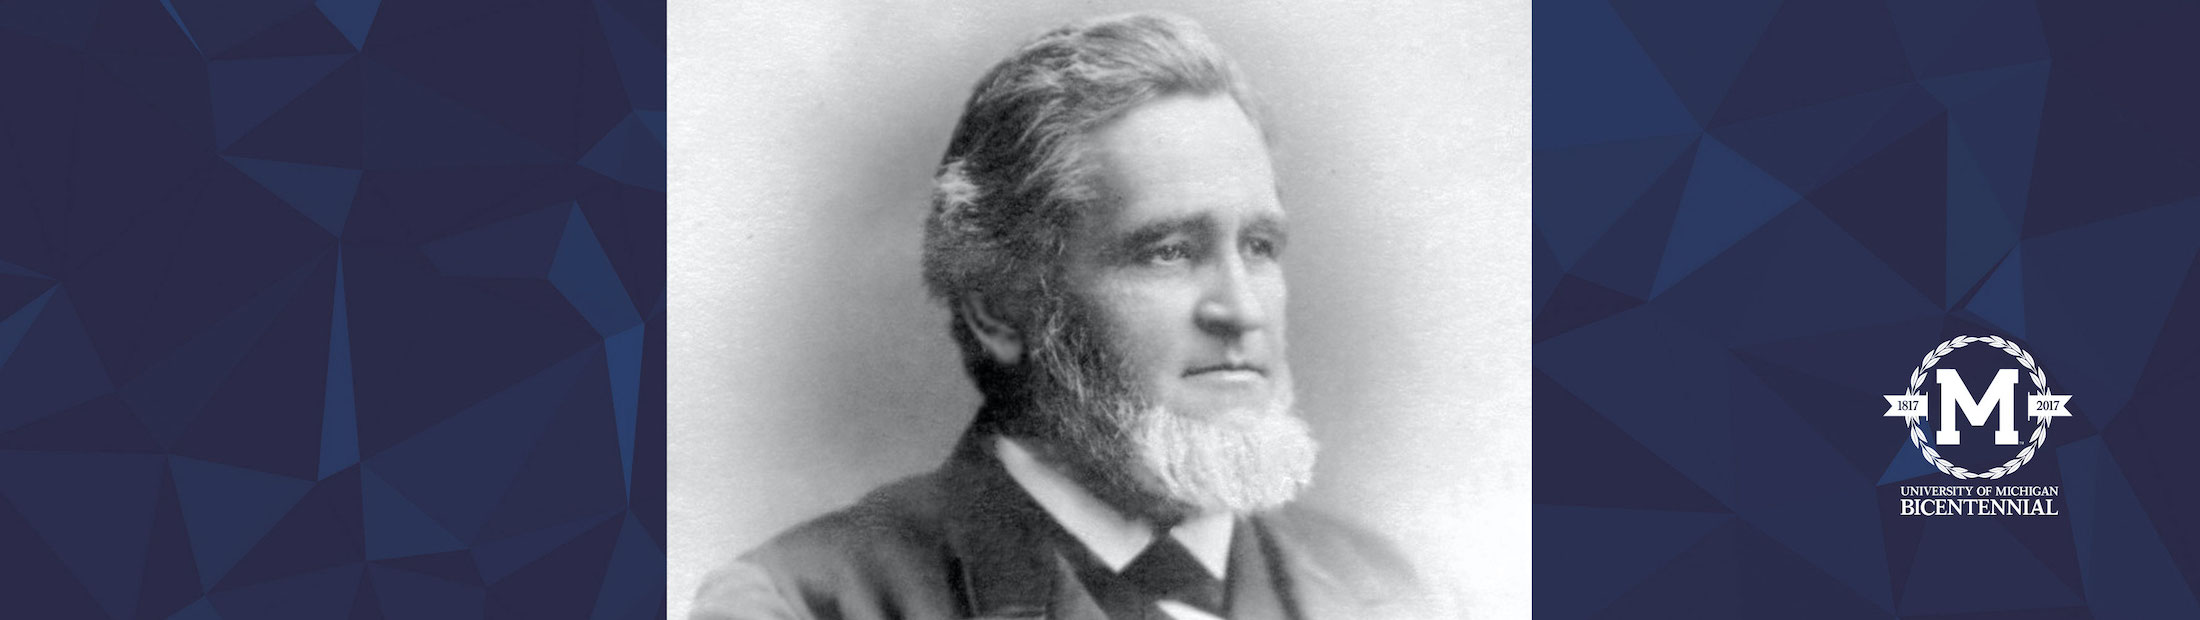 Black and white portrait of Michigan Engineering’s first professor, Alexander Winchel.